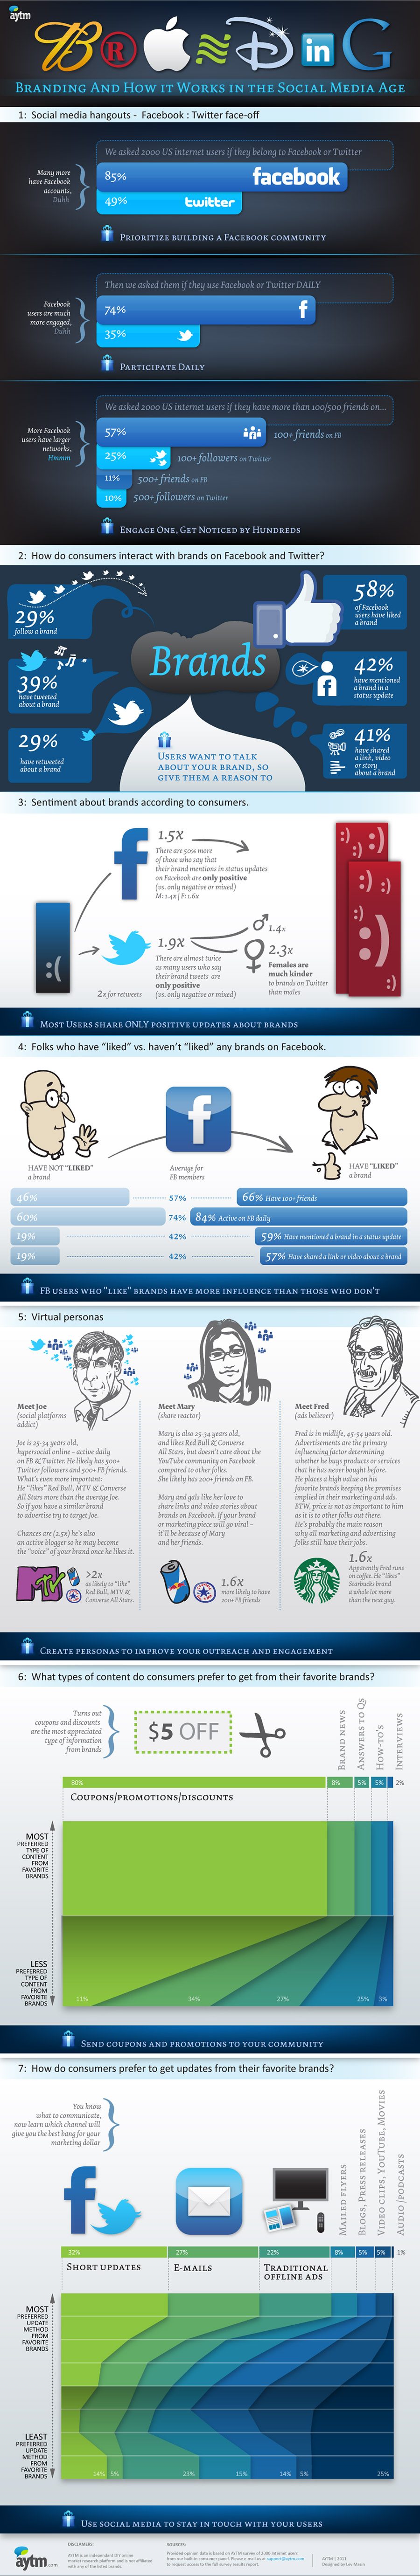 Infográfico: branding na era das mídias sociais